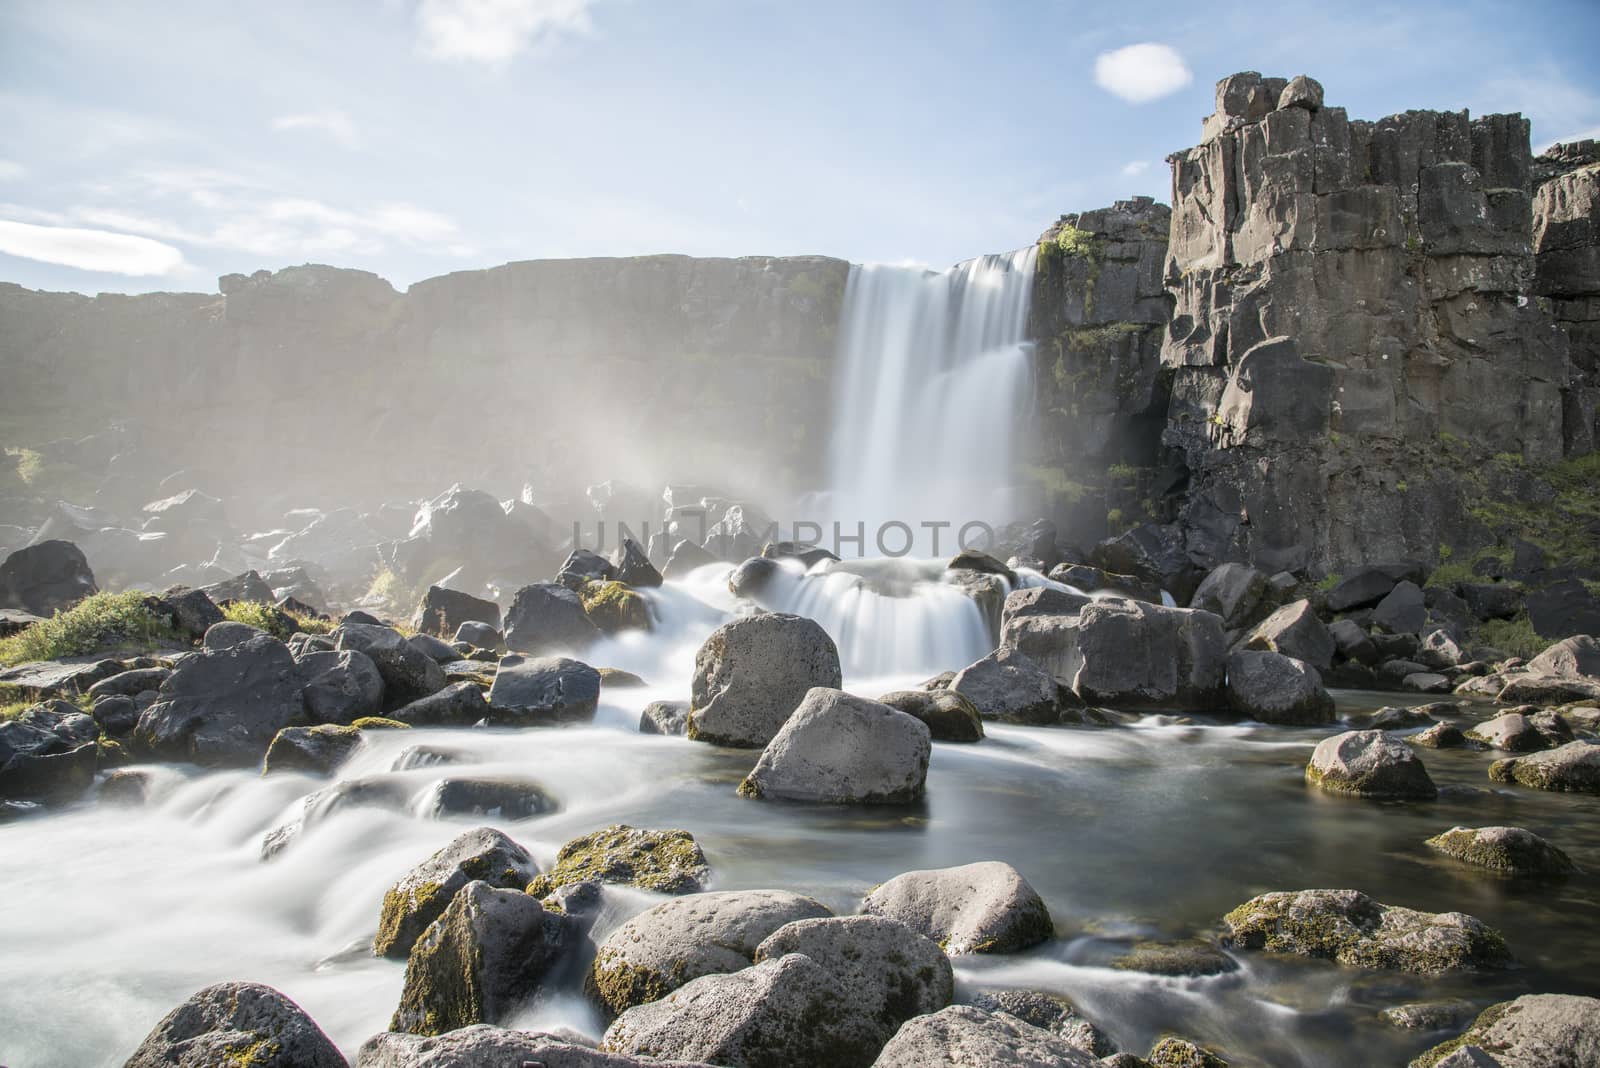 Öxarárfoss Waterfall by MichaelMou85